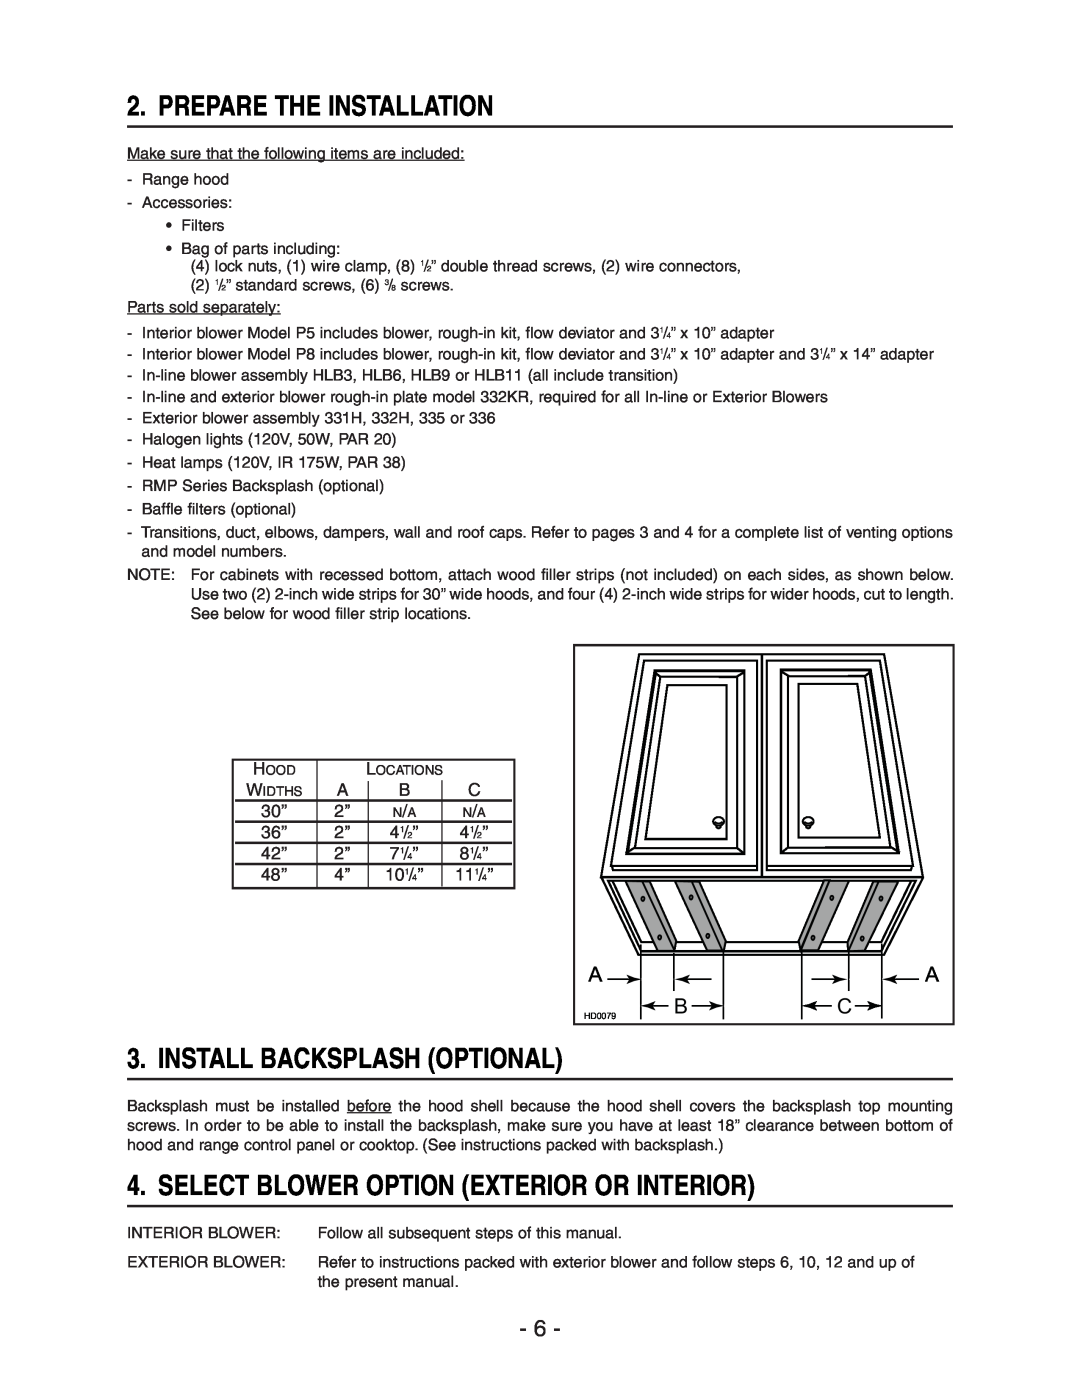 NuTone NP64000 manual Prepare The Installation, Install Backsplash Optional, Select Blower Option Exterior Or Interior 